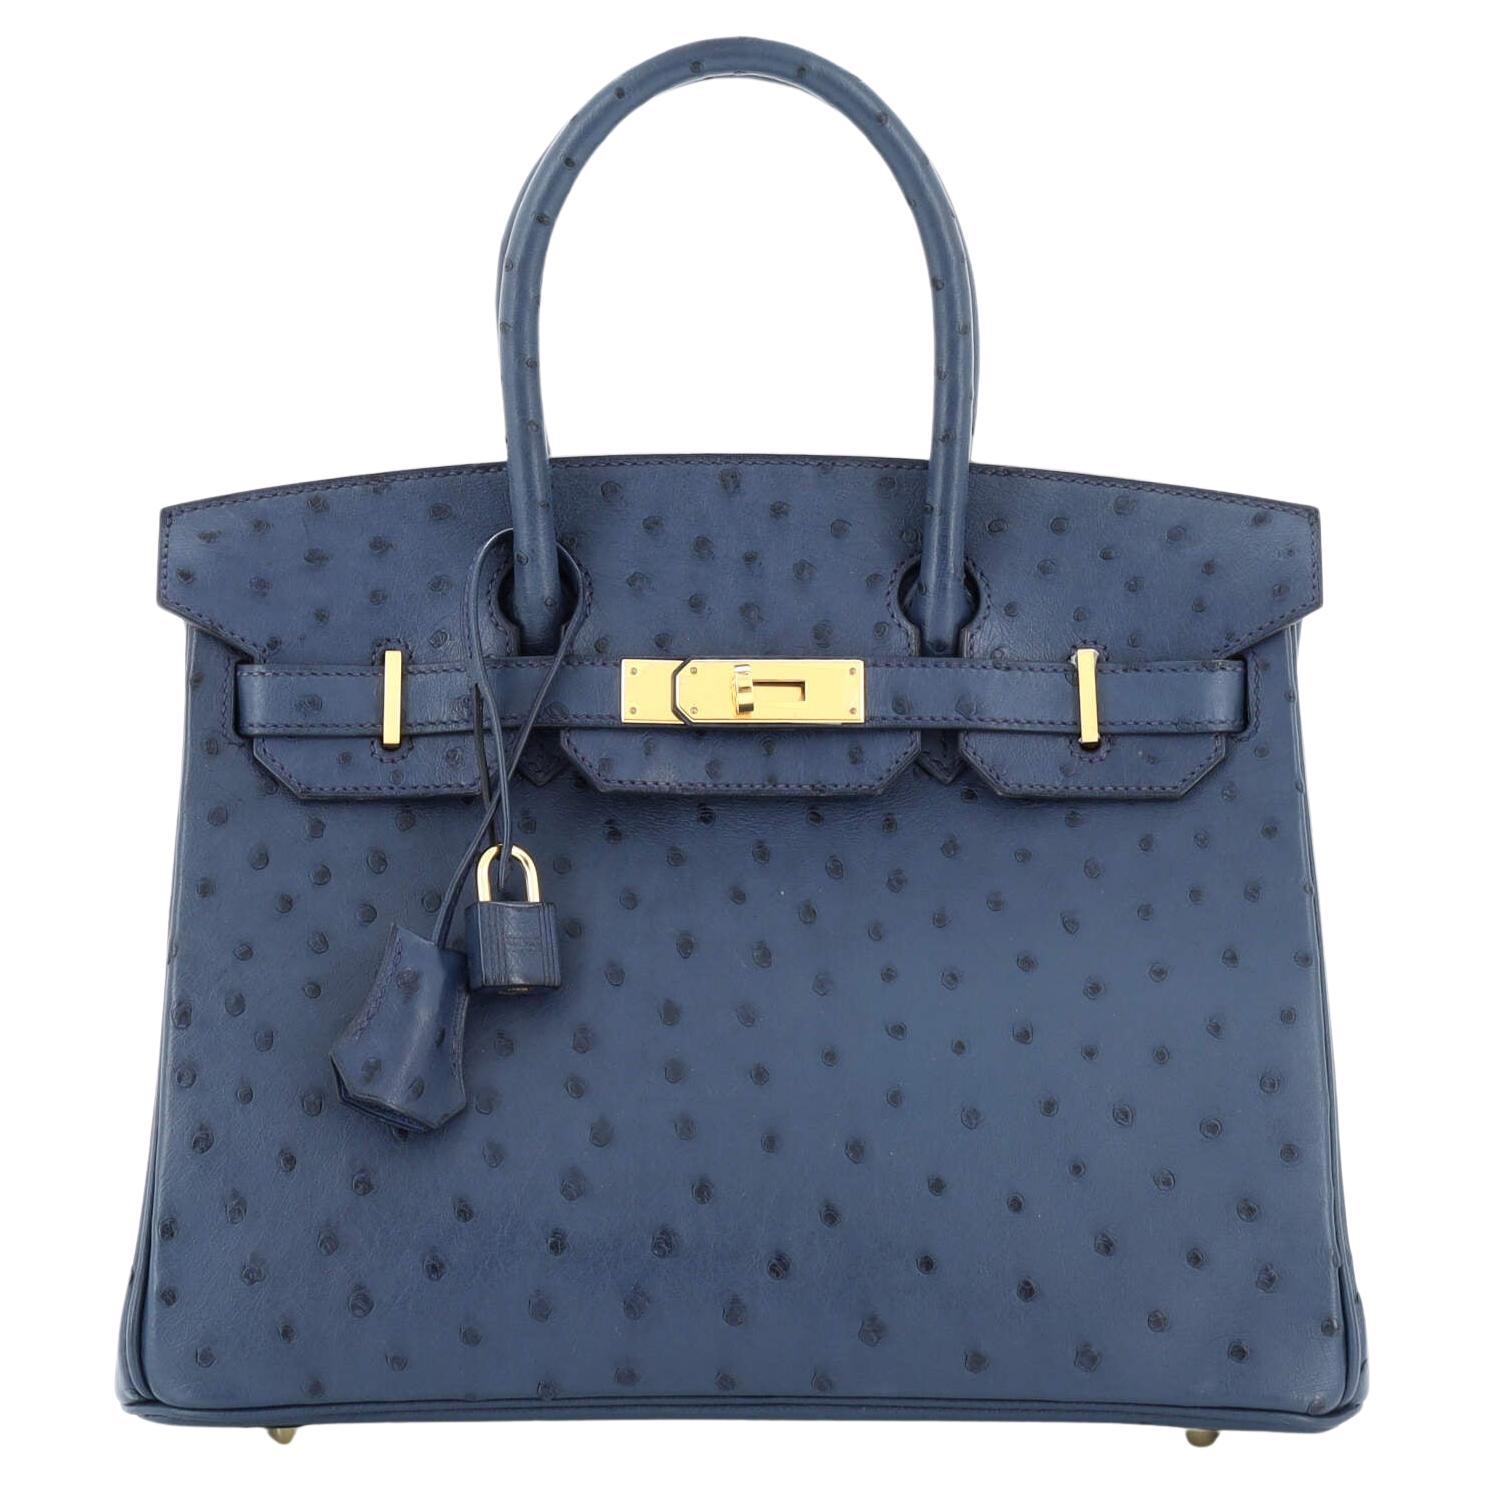 Hermes Birkin Handbag Deep Blue Ostrich with Gold Hardware 30